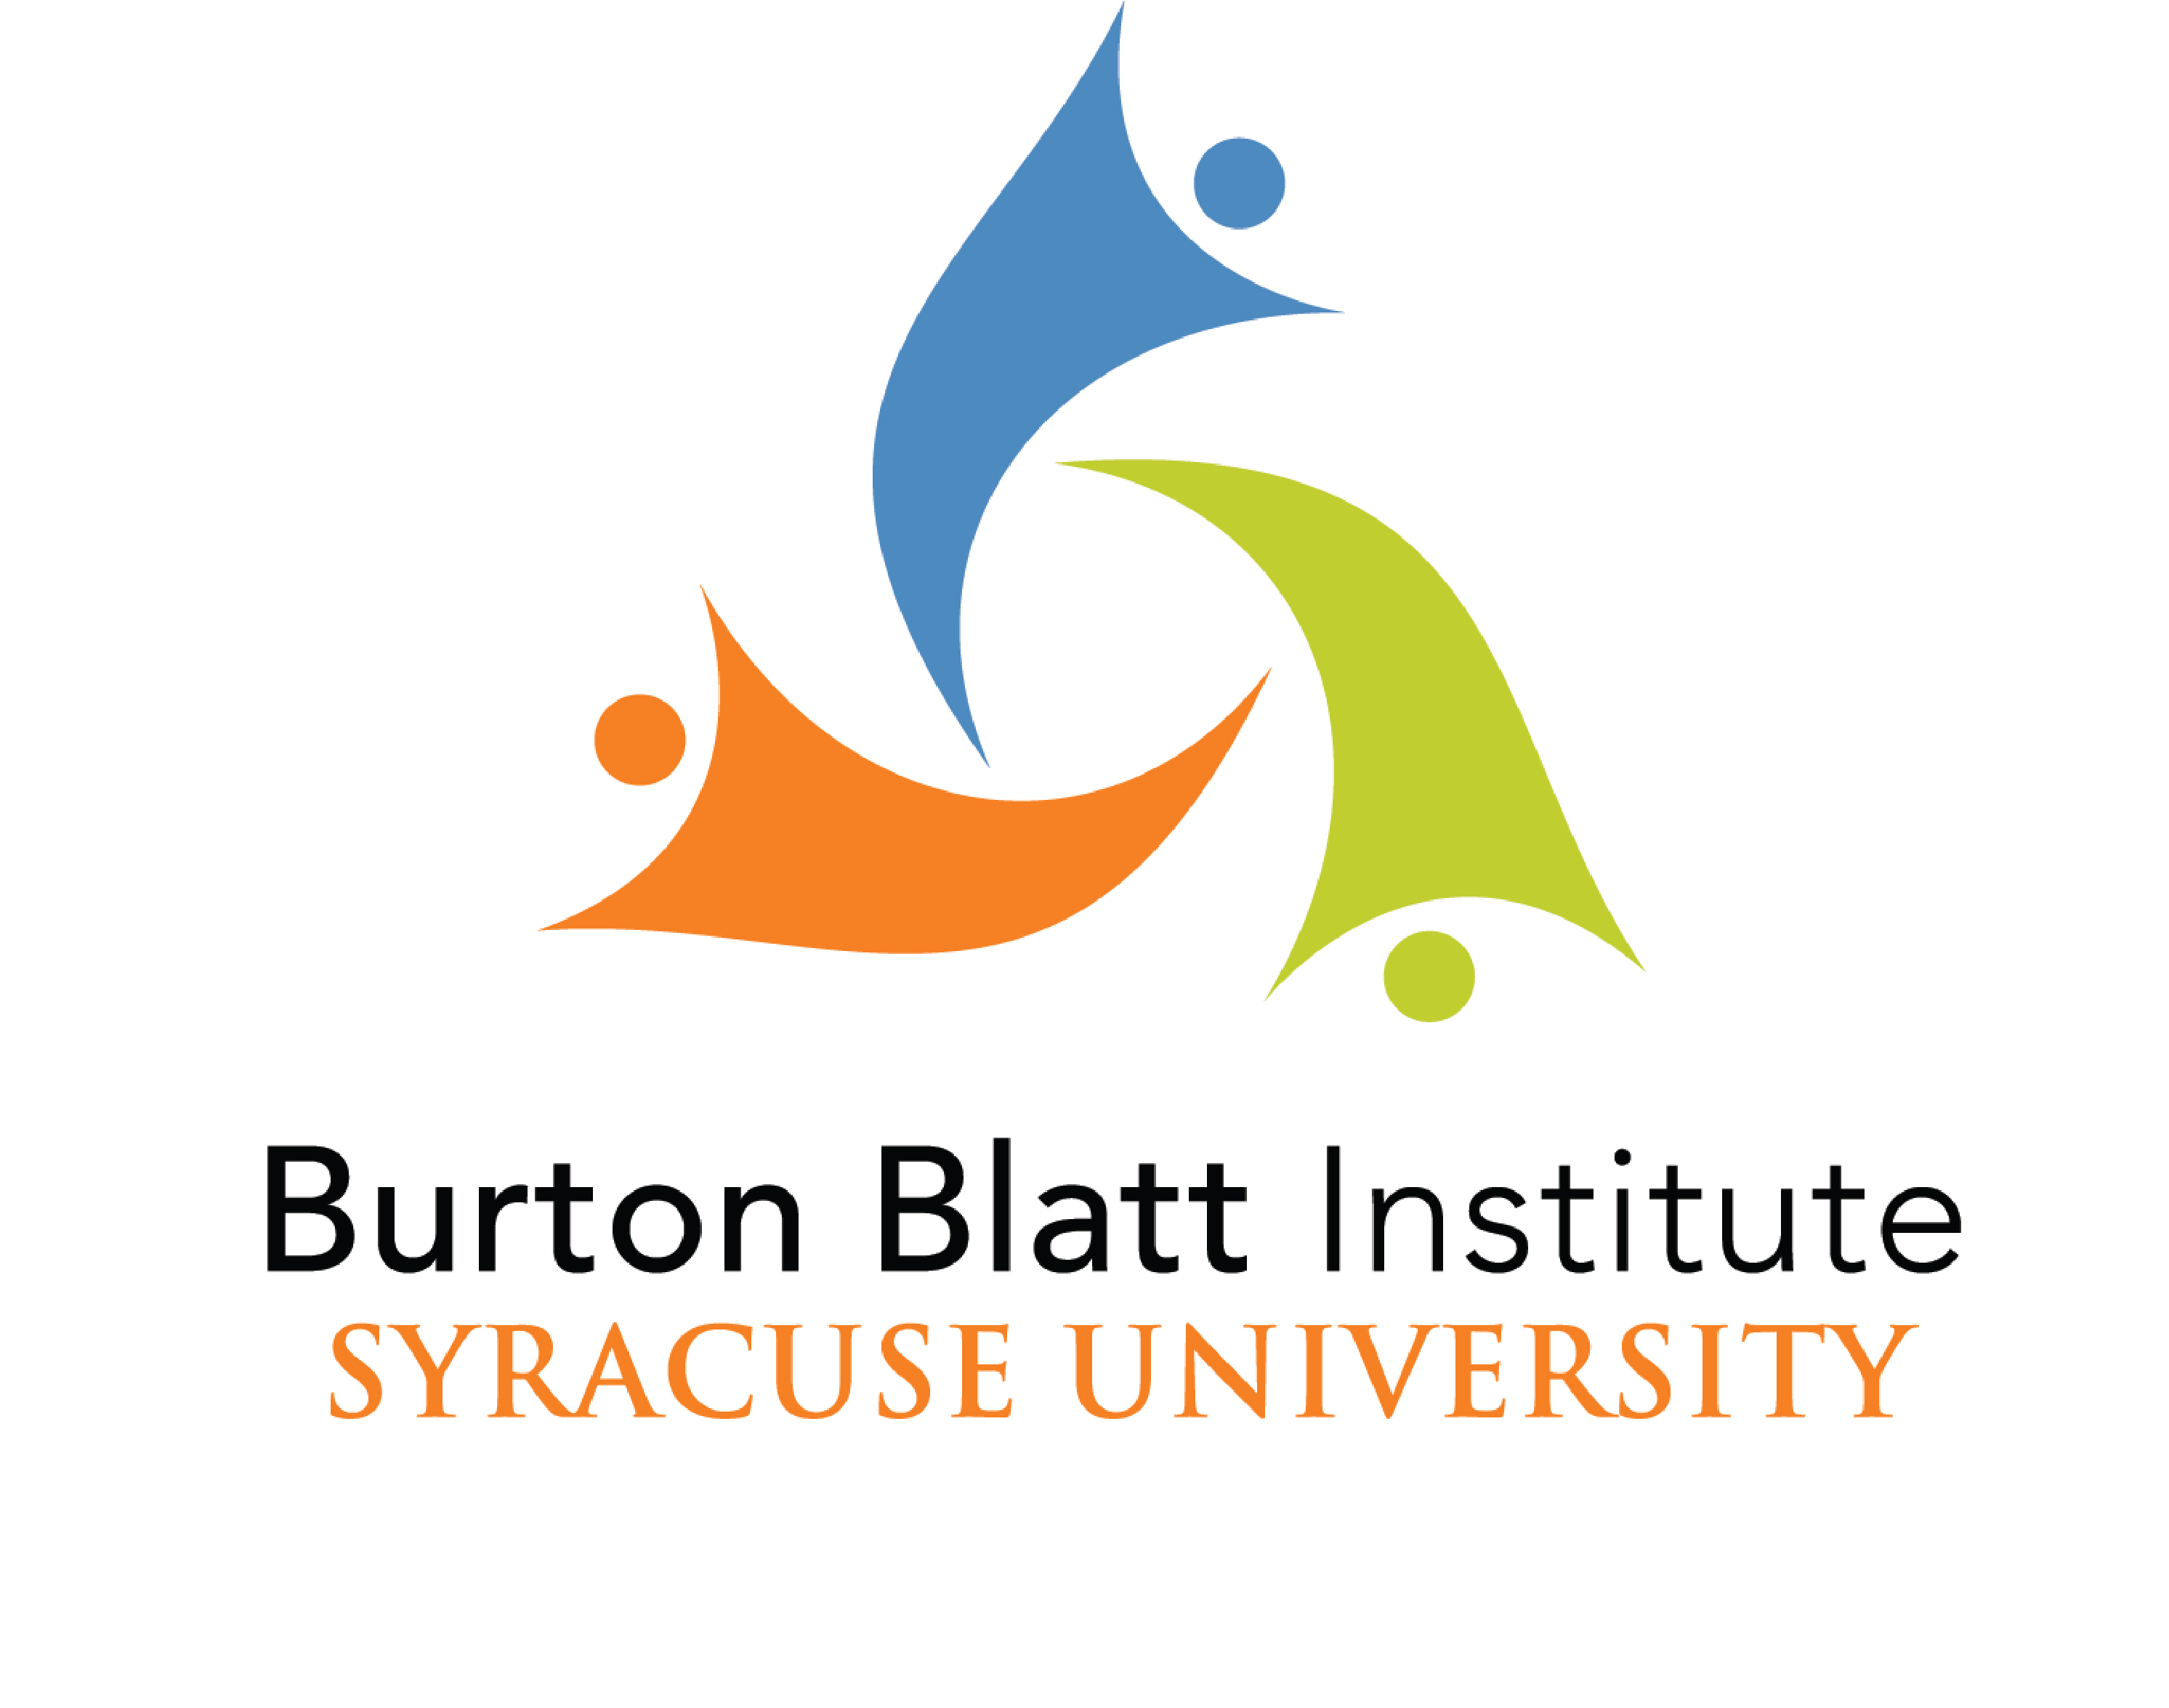 Burton Blatt Institute Syracuse University Image Description: Burton Blatt Institute logo